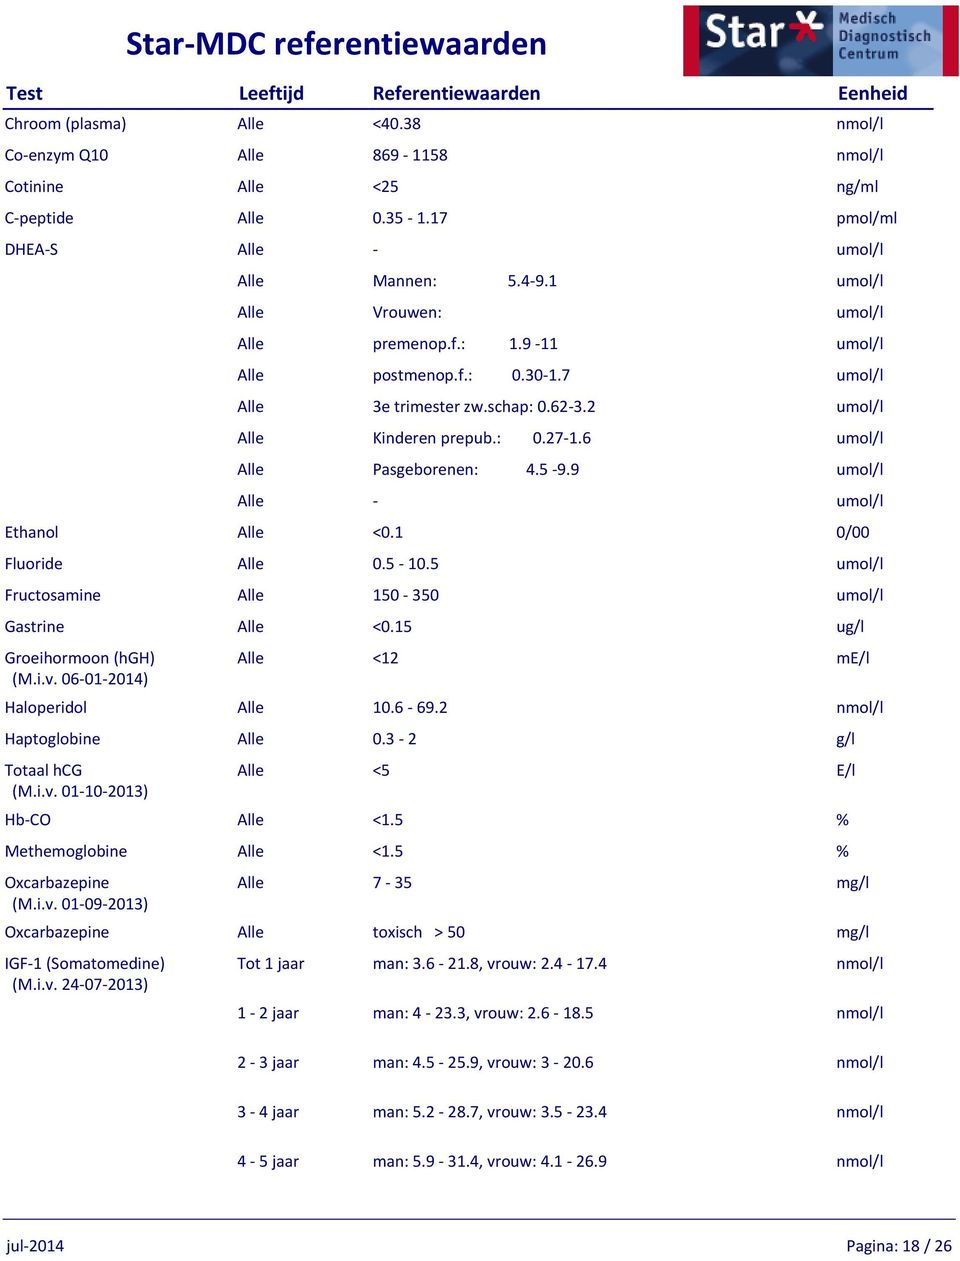 5 umol/l Fructosamine 150-350 umol/l Gastrine <0.15 ug/l Groeihormoon (hgh) (M.i.v. 06-01-2014) <12 me/l Haloperidol 10.6-69.2 nmol/l Haptoglobine 0.3-2 g/l Totaal hcg (M.i.v. 01-10-2013) <5 E/l Hb-CO <1.